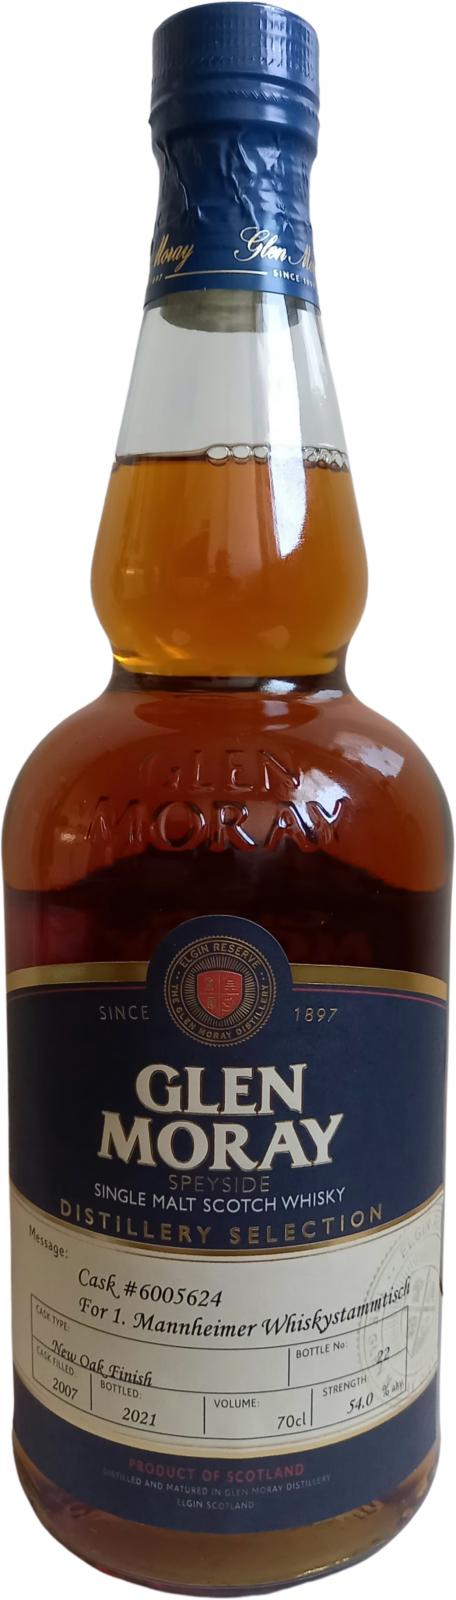 Glen Moray 2007 Hand Bottled at the Distillery 2021 Release (Cask #6005624) Single Malt Scotch Whisky | 700ML